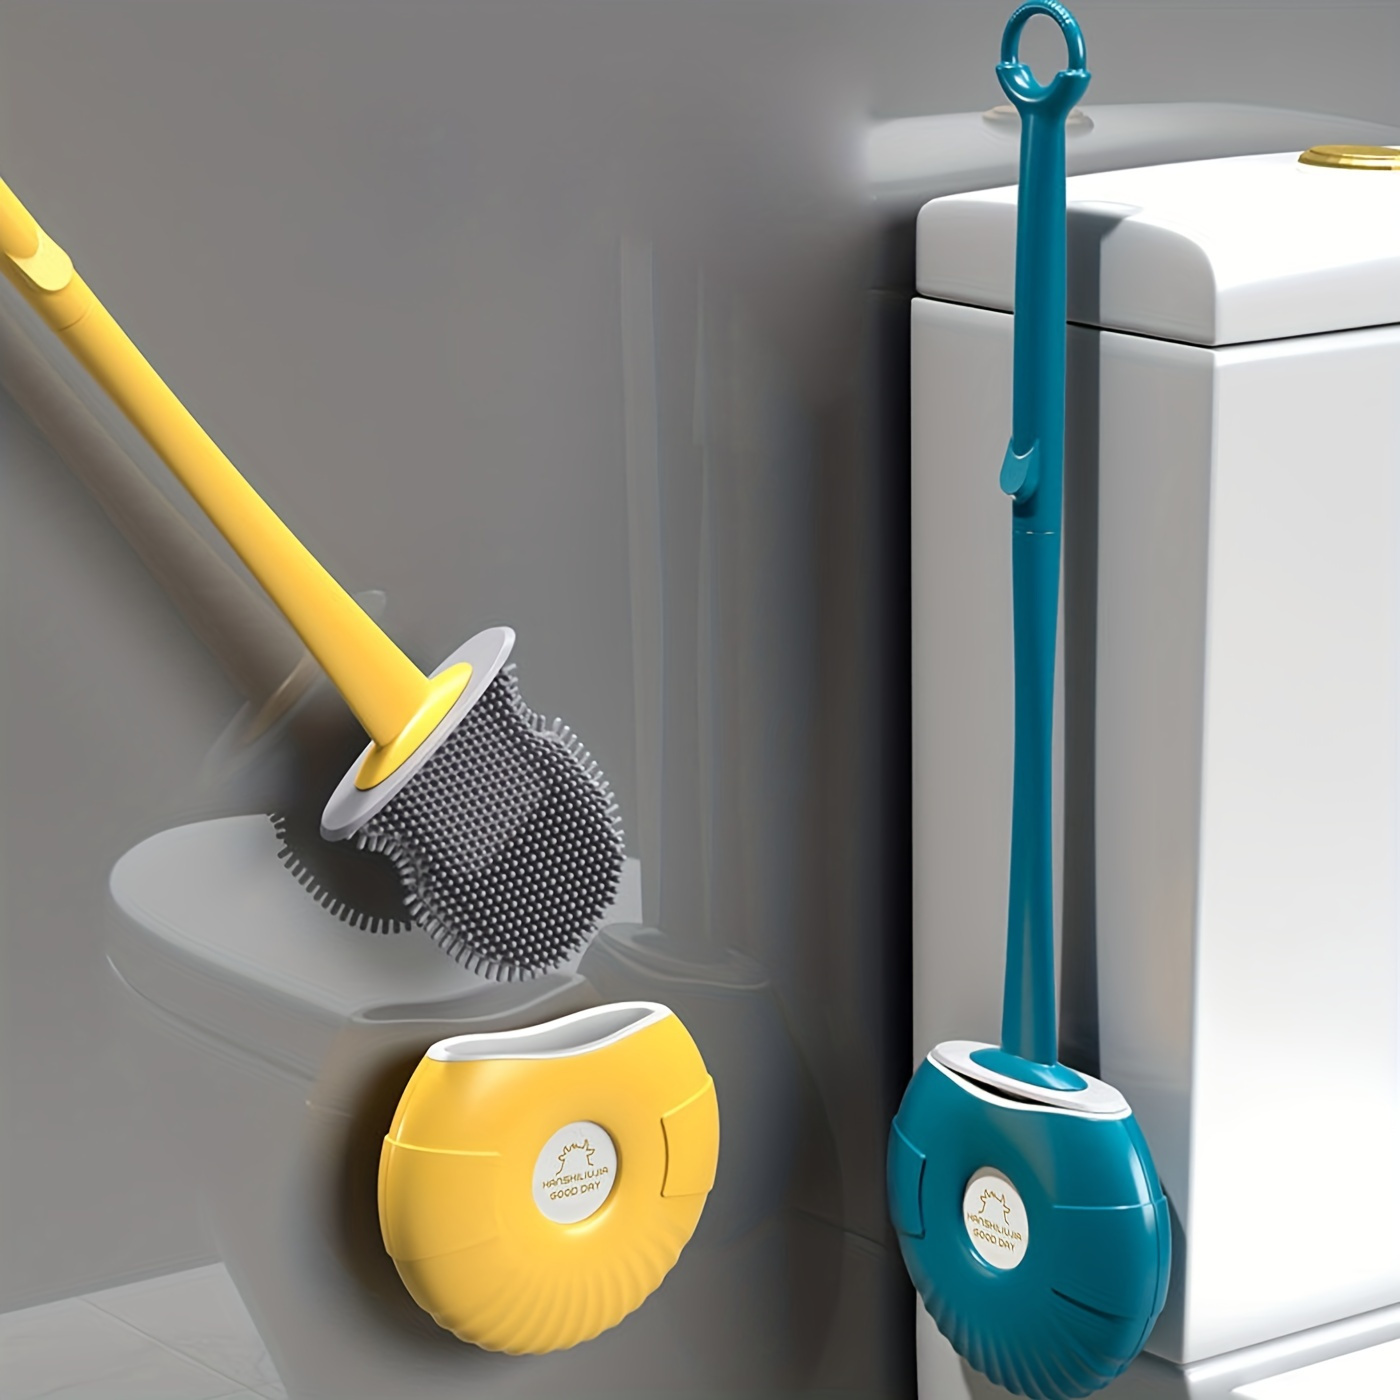 Cepillo de silicona flexible para limpieza de inodoro con soporte para  pared, mango largo antideslizante, cepillo de silicona suave para limpiar